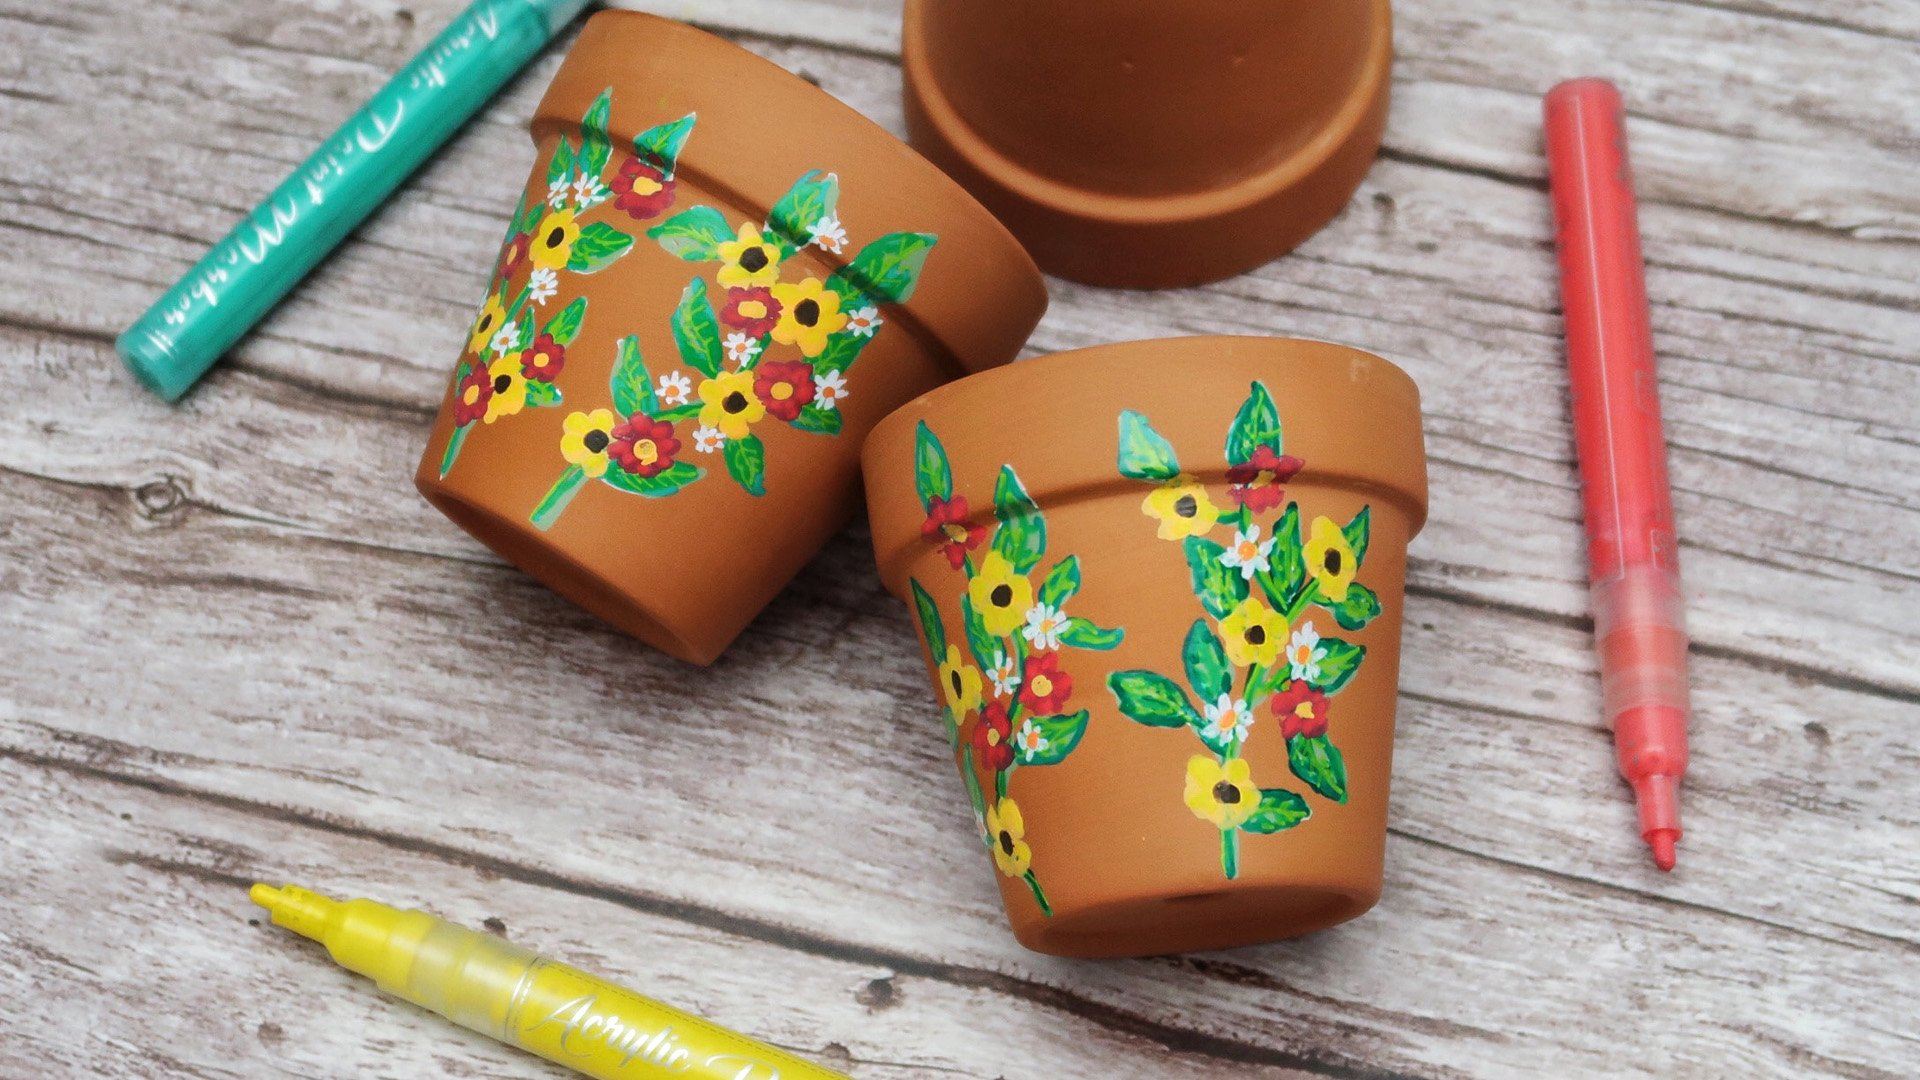 How to Paint Plant Pots Using Acrylic Paint Pens - Chalkola